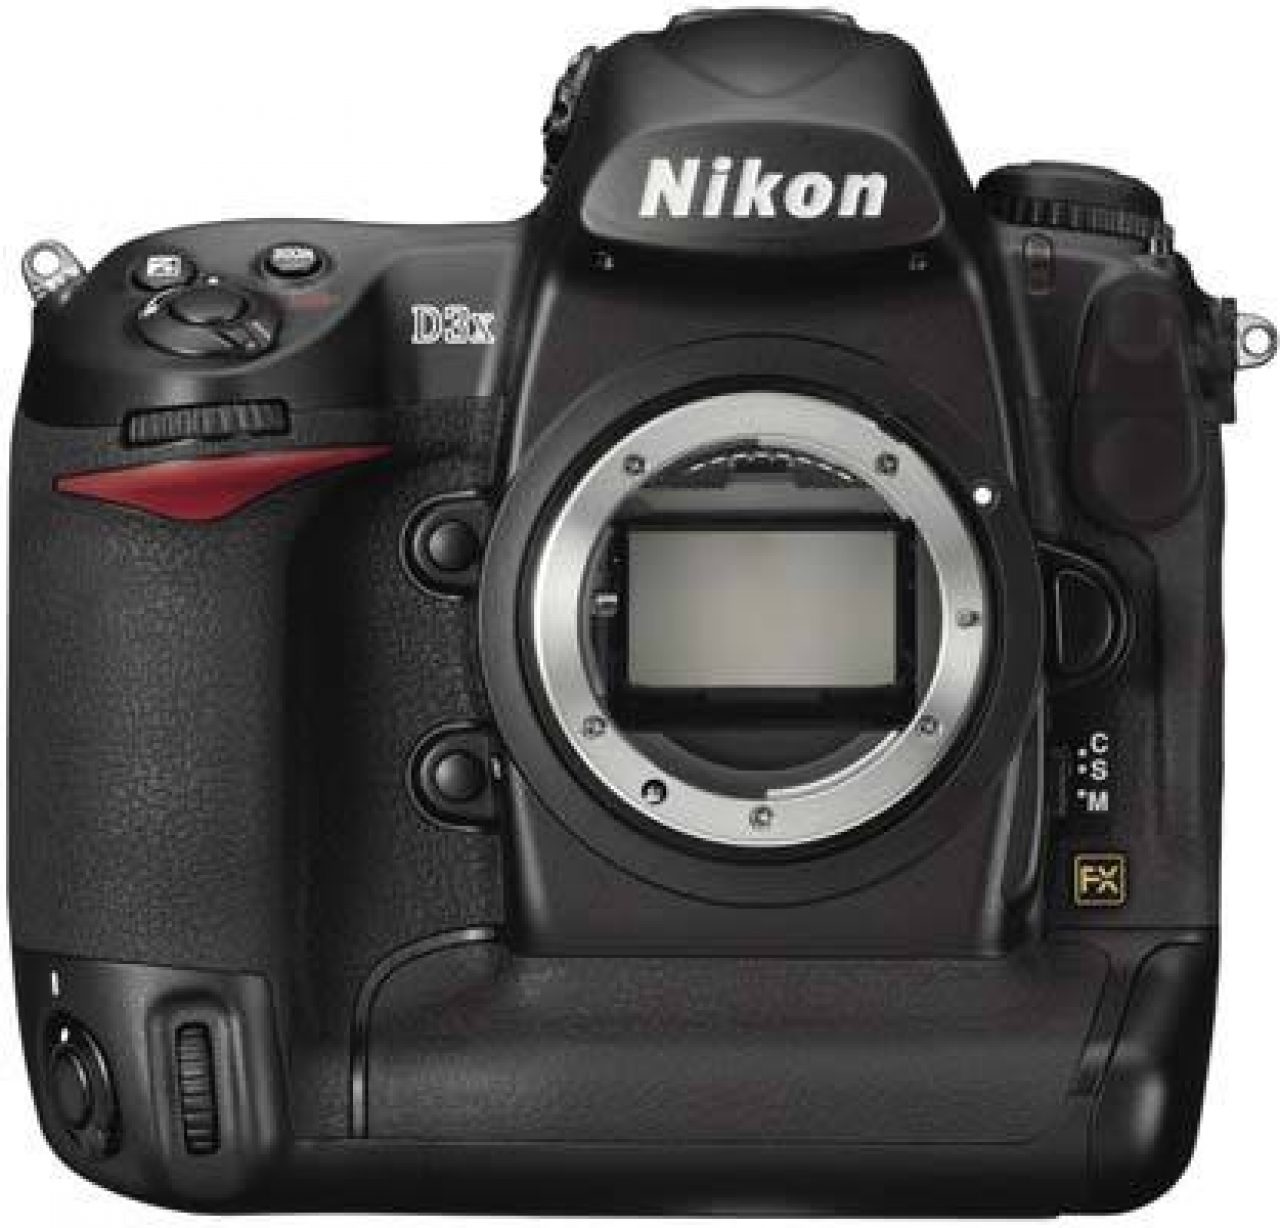 for Nikon D750 Camera Body Bottom Interface Cap Rubber Cover Port Protective Skin Holder